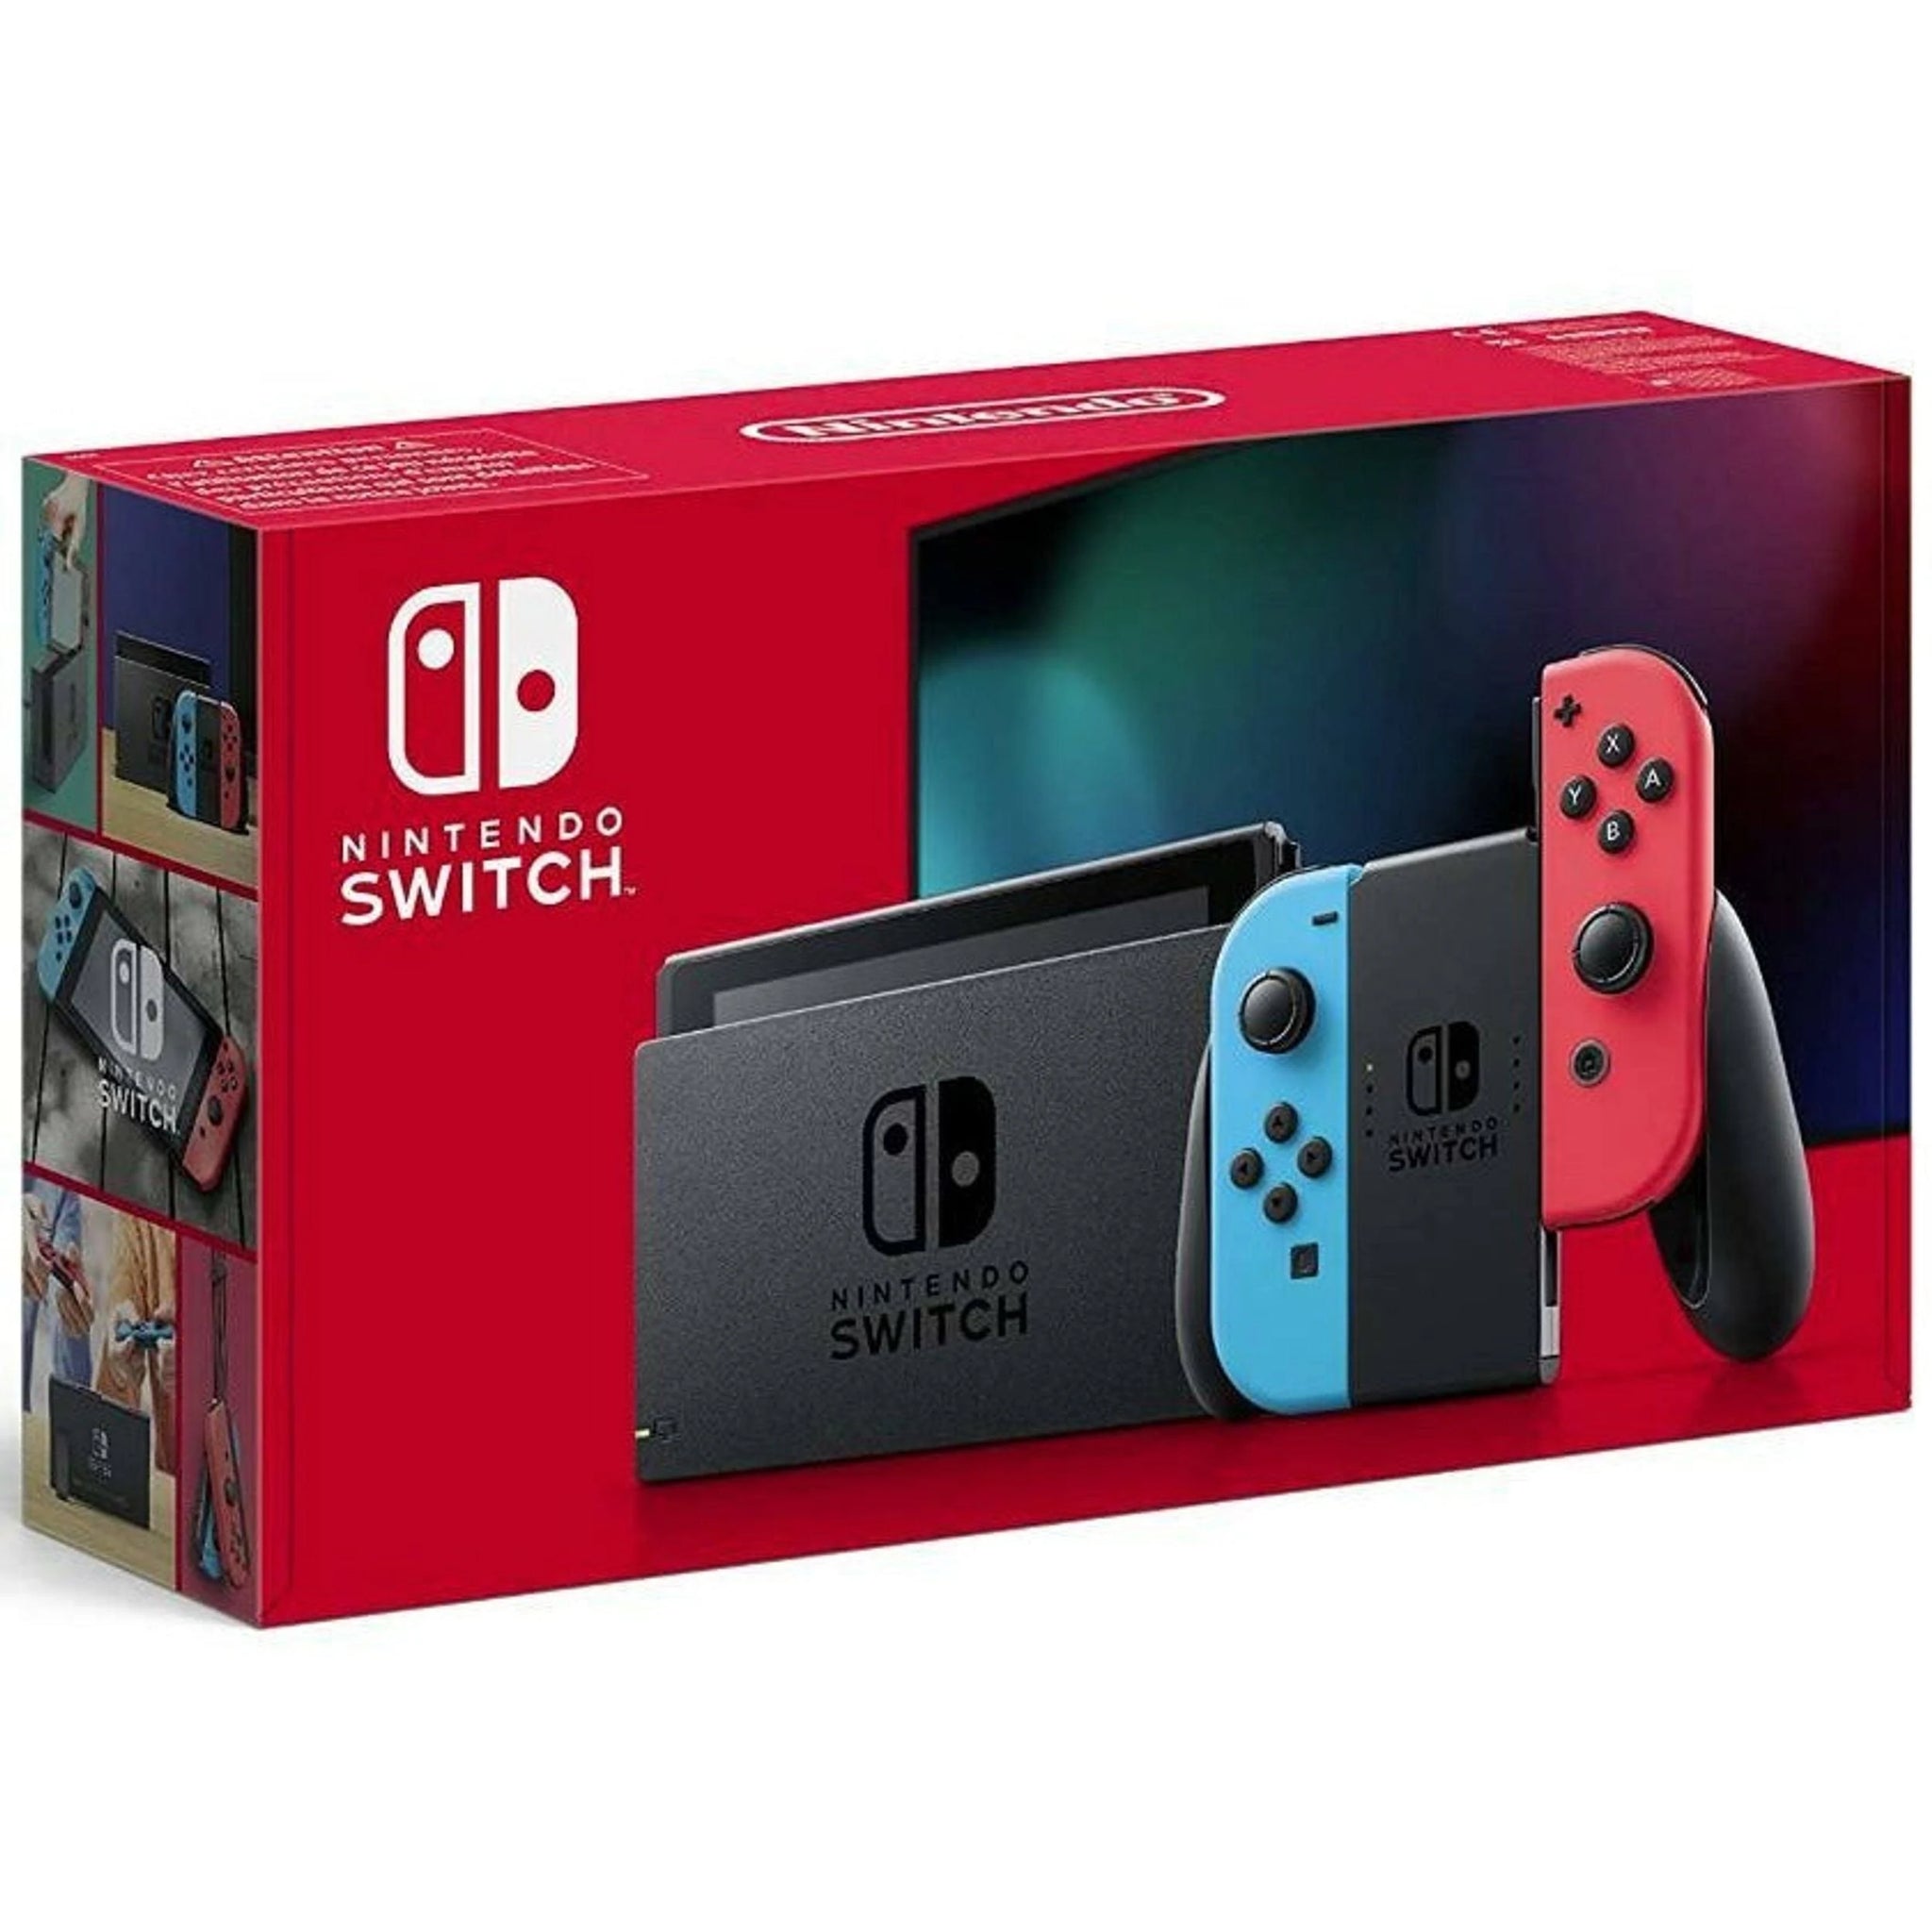 Read Description* Nintendo Switch Console - Neon Red/Blue | Cash 